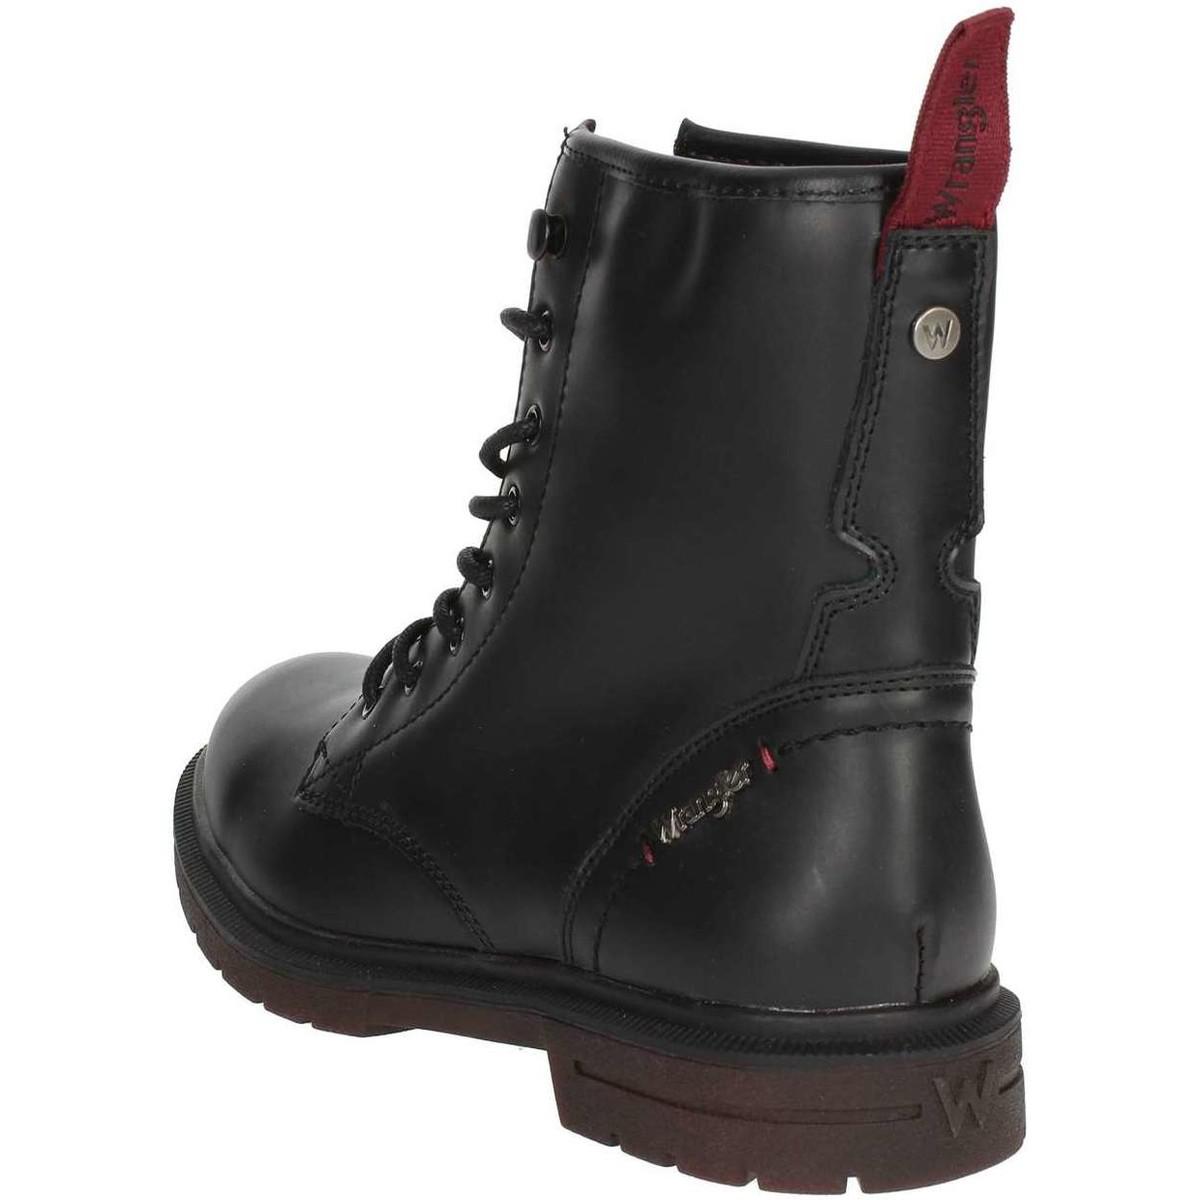 Wrangler Wl182704 Boot Woman Black 40 